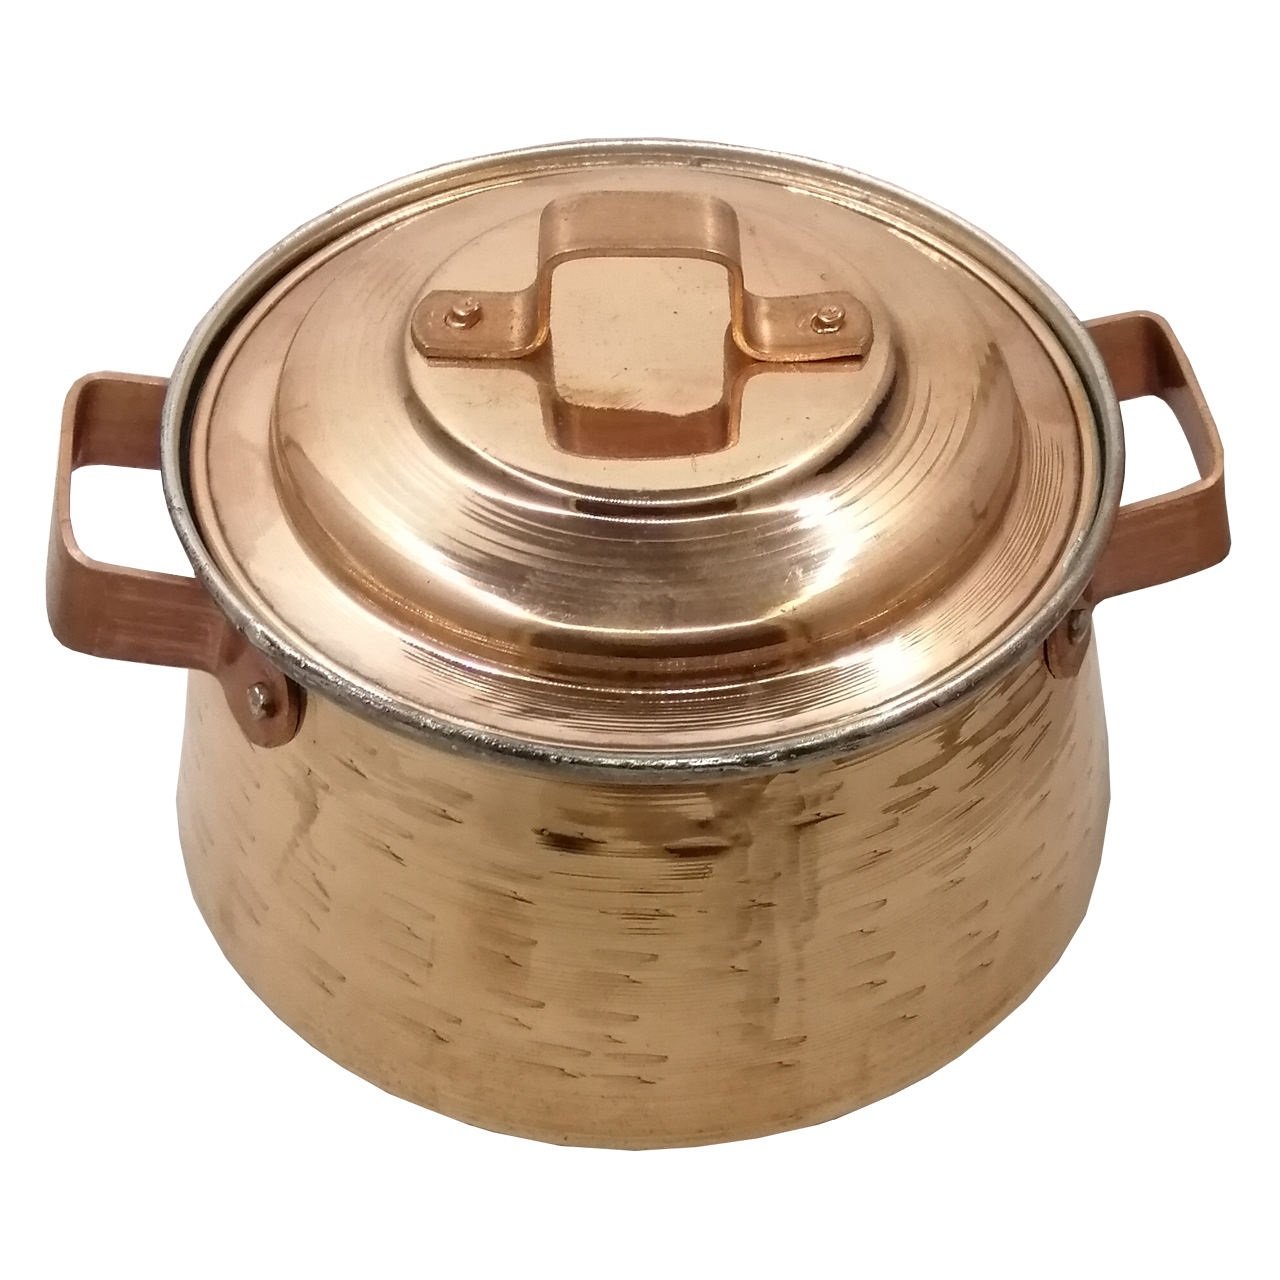 Handicraft Copper stock pot Model NT-33,铜制品,铜制品价格,铜制品手工,铜料